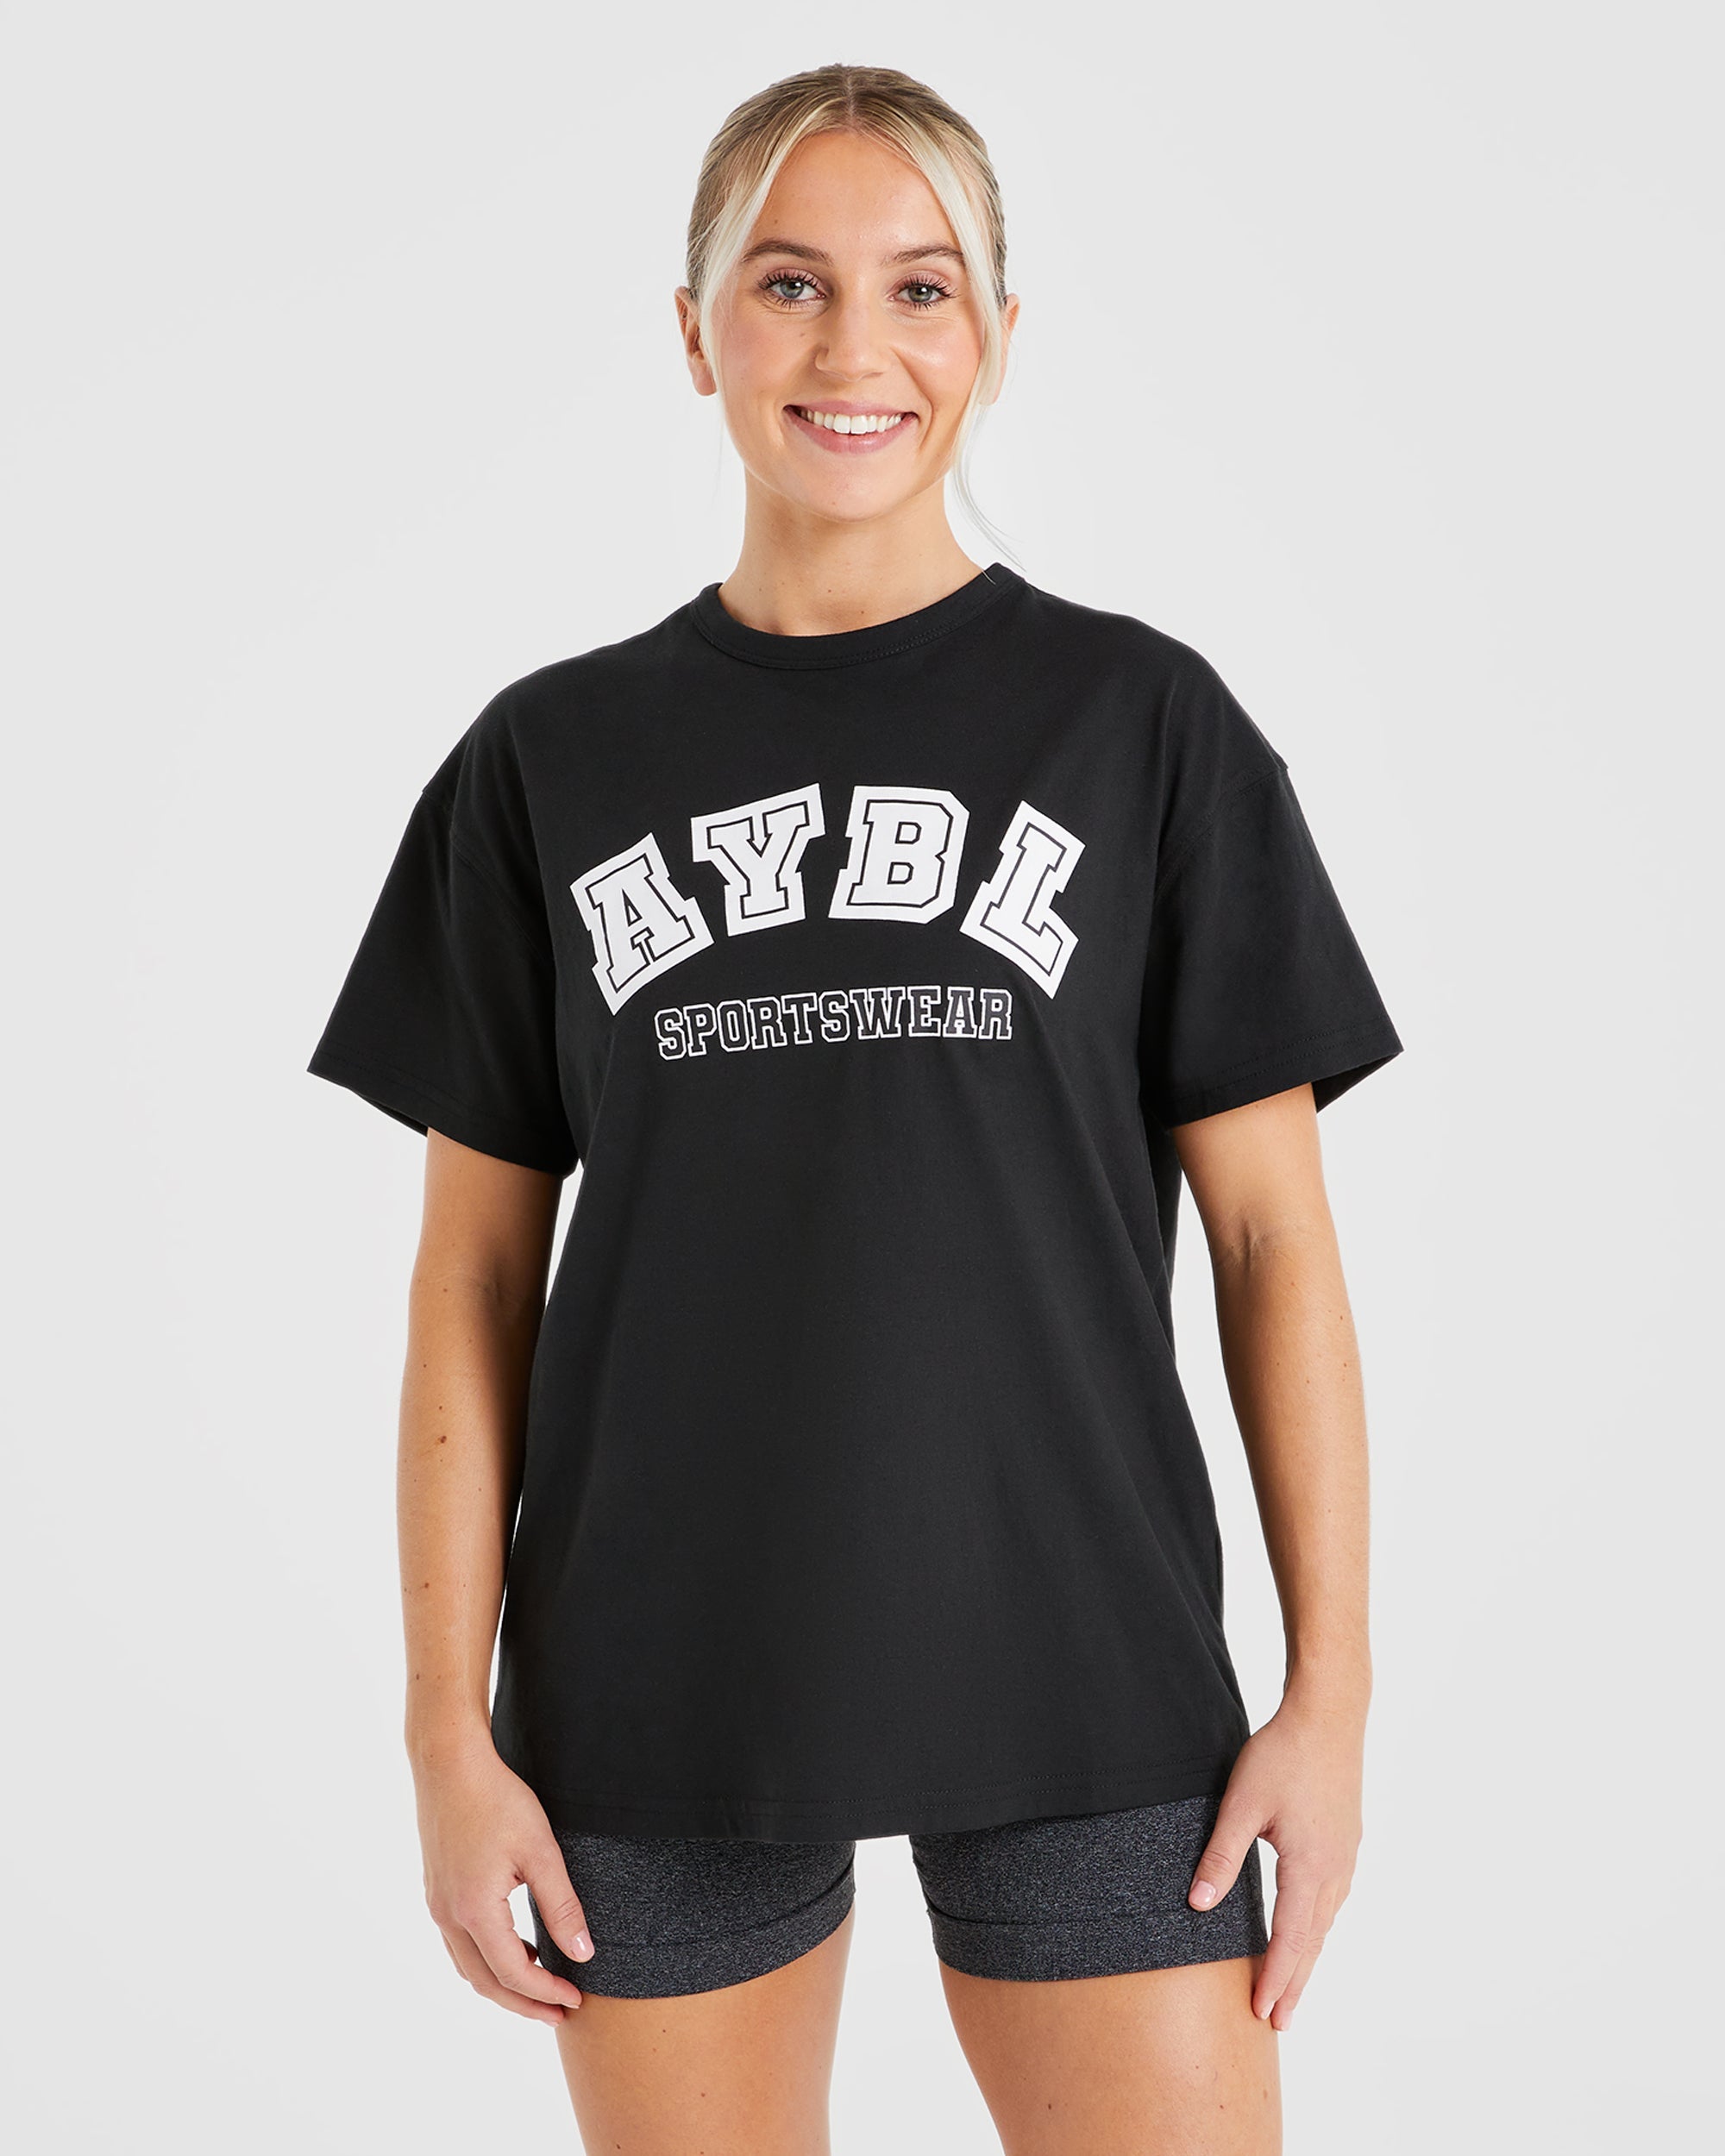 AYBL Sports Club Oversized T Shirt - Black